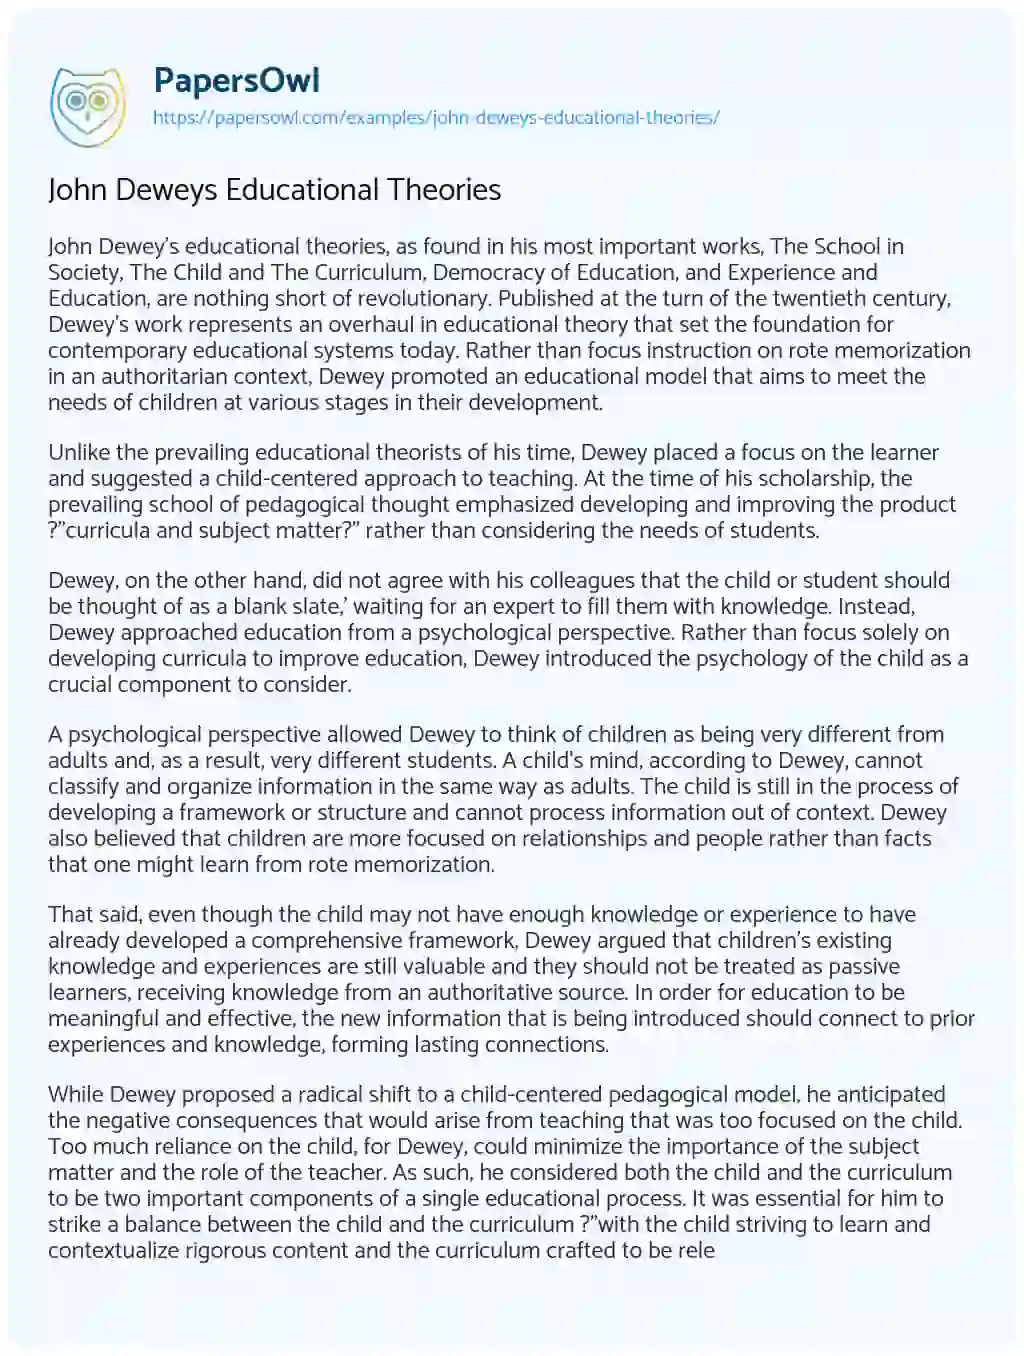 Essay on John Deweys Educational Theories